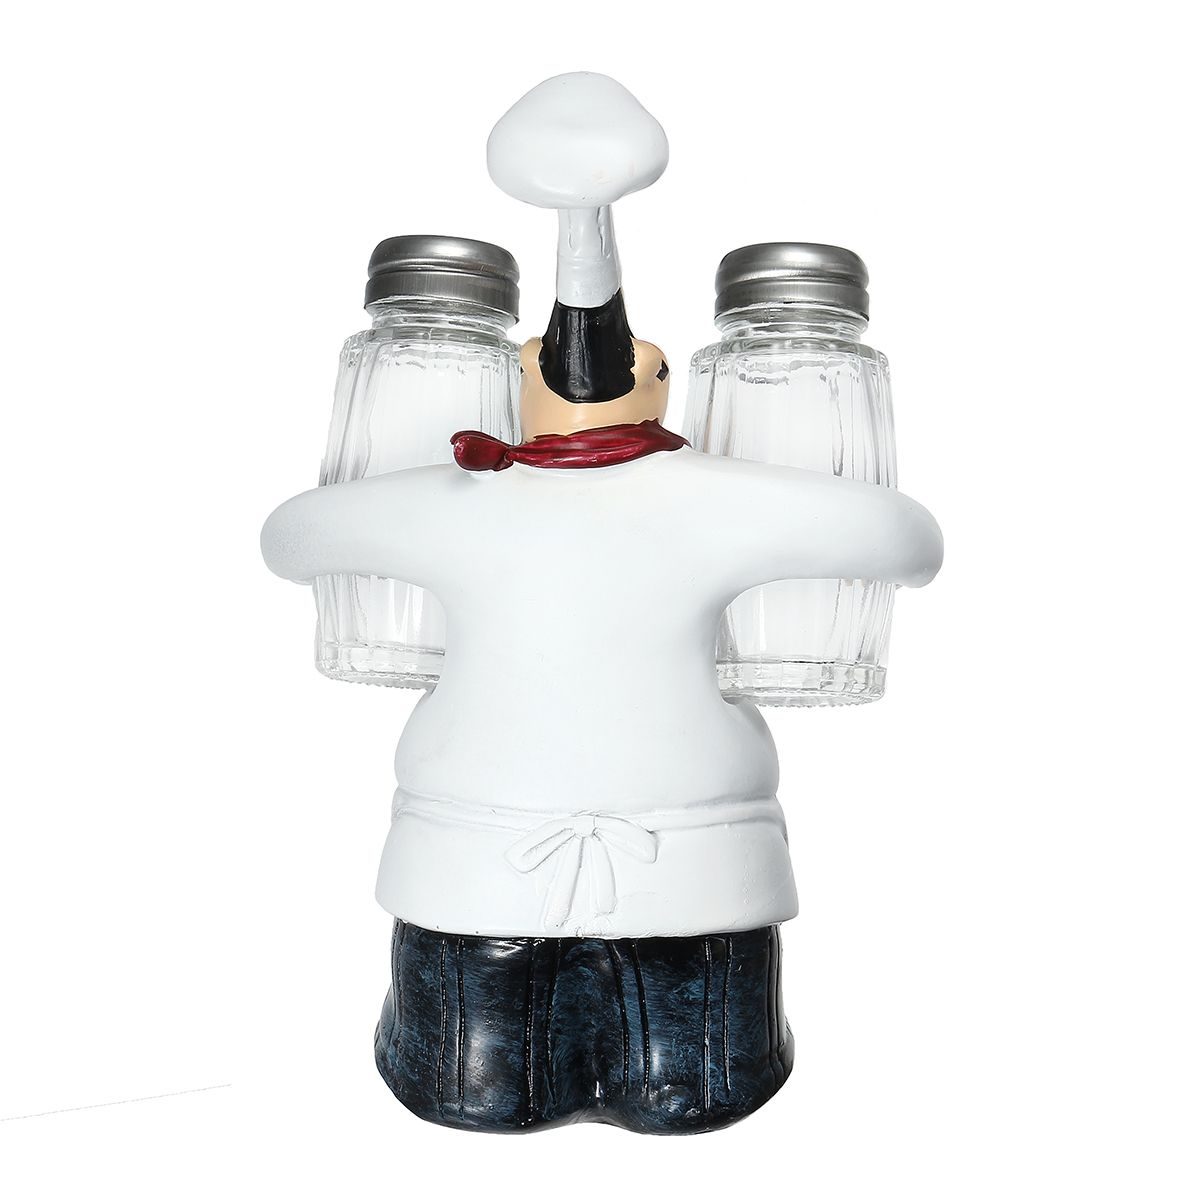 Spice-Bottles-Restaurant-Resin-Chef-Figurine-Cafe-Home-Kitchen-Statue-Ornaments-1571234